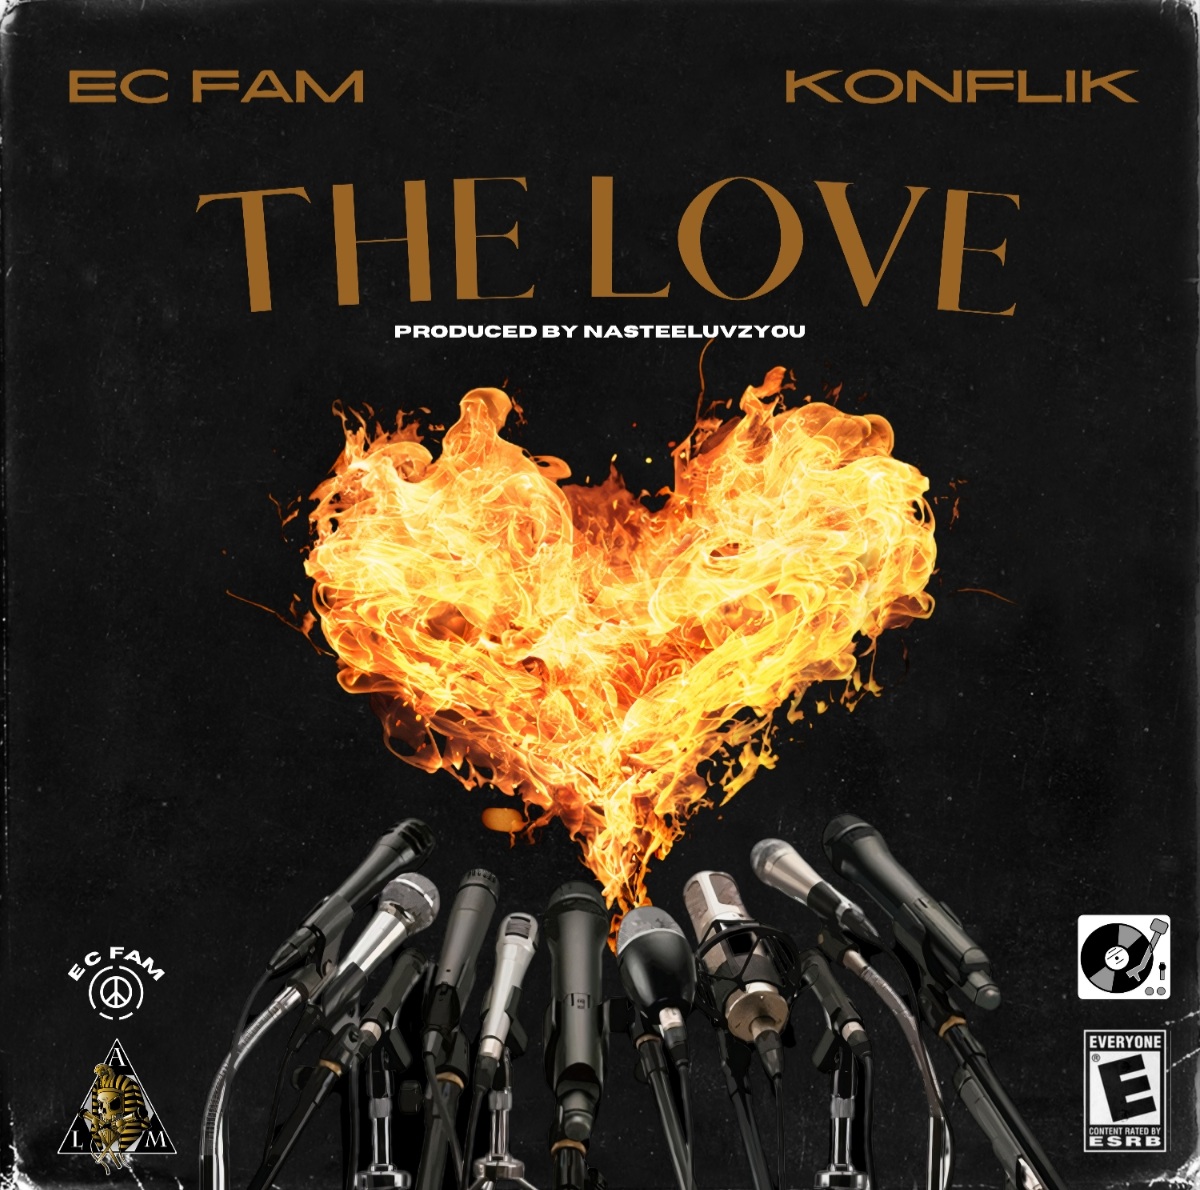 EC Fam & Konflik Do It All For "The Love"